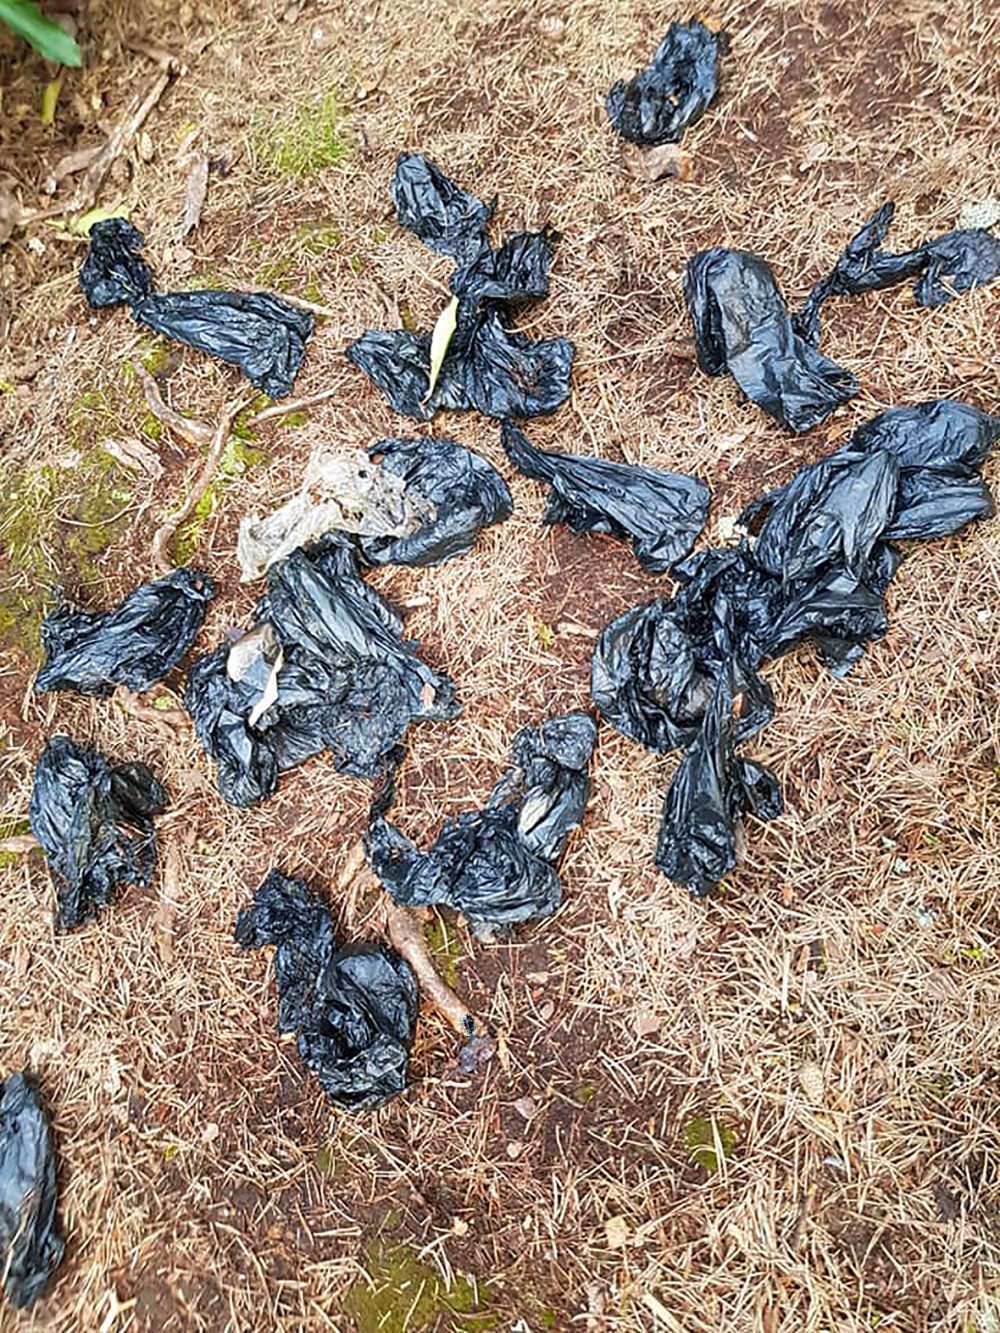 Dog poo in bags - Community News Scotland